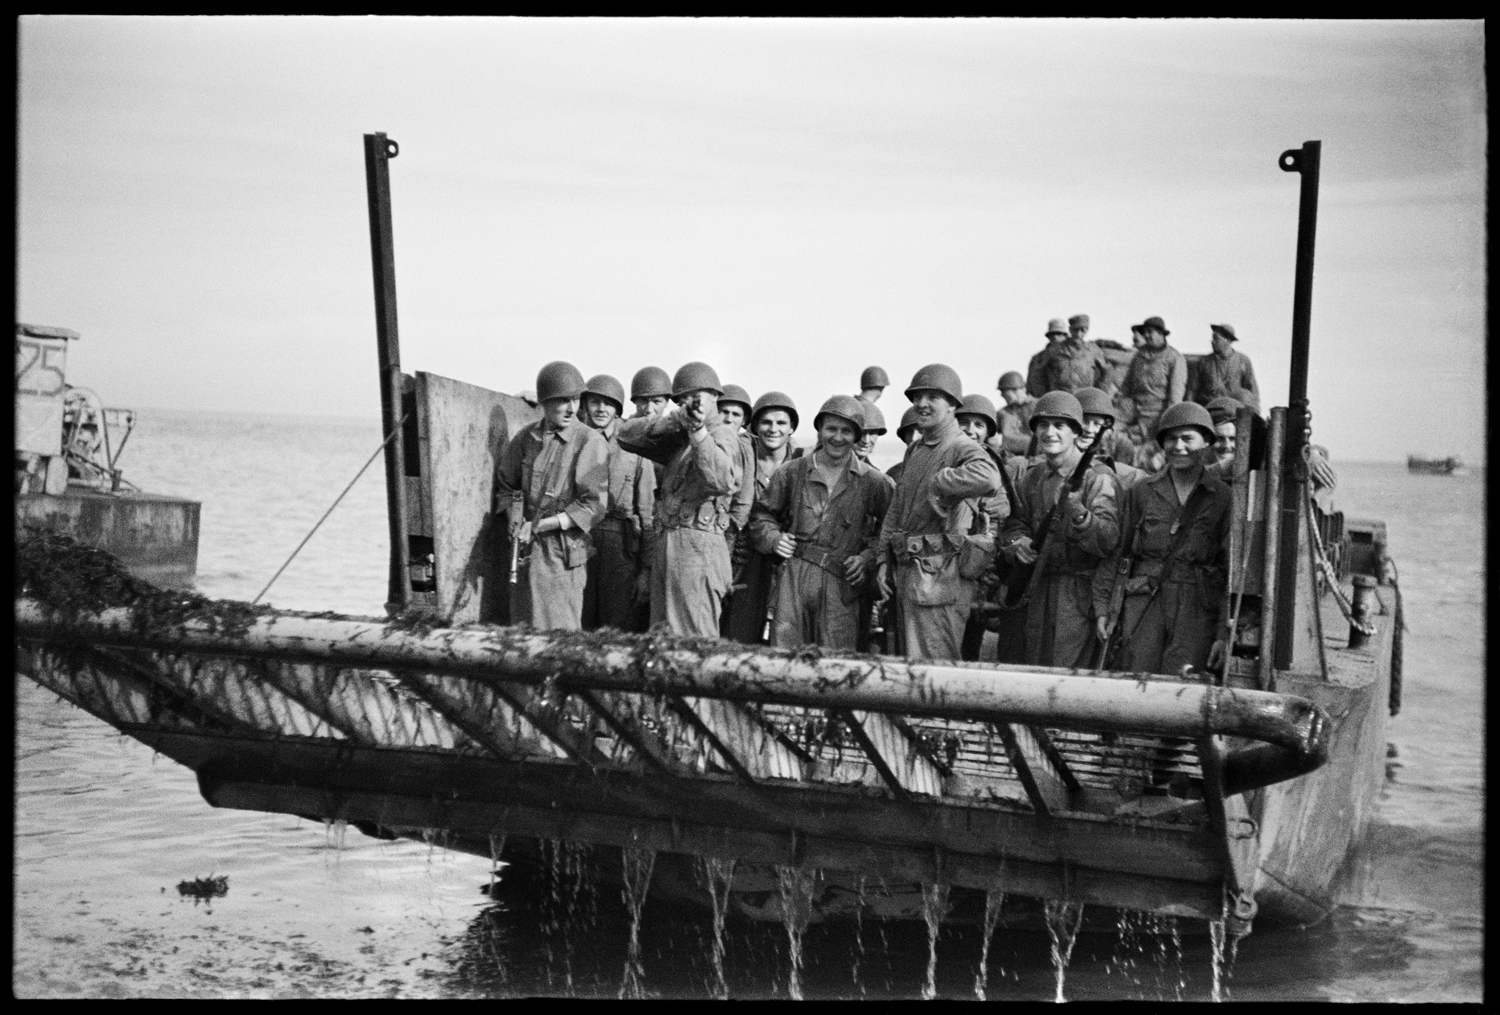 Rangers on landing craft near Licata, Sicily, 1943.